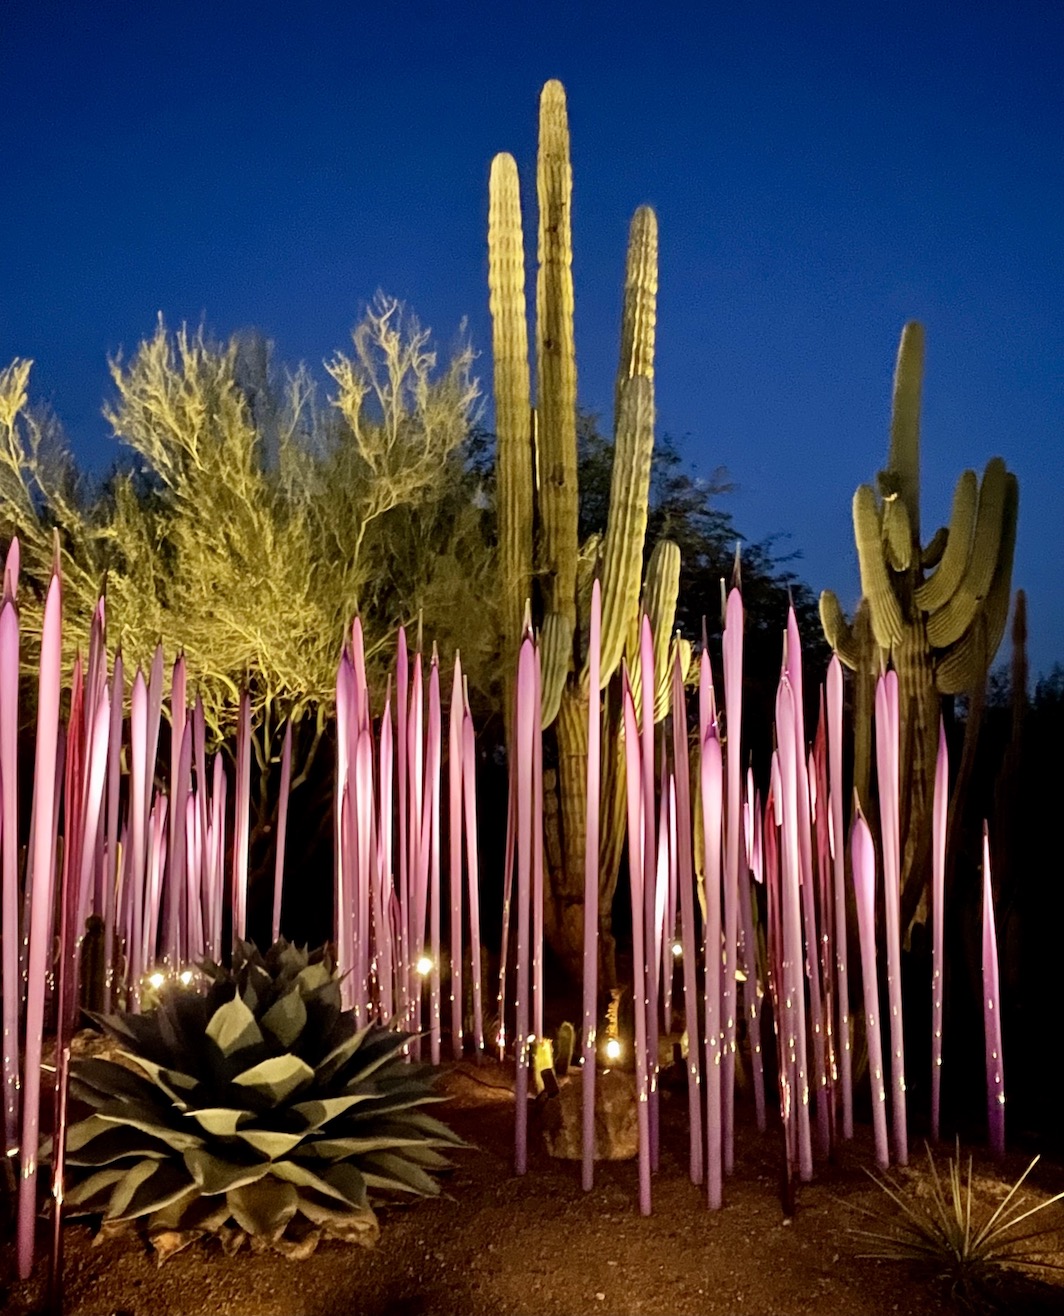 The Desert Botanical Garden in Phoenix celebrates the wide diversity of desert plants over 140 acres.